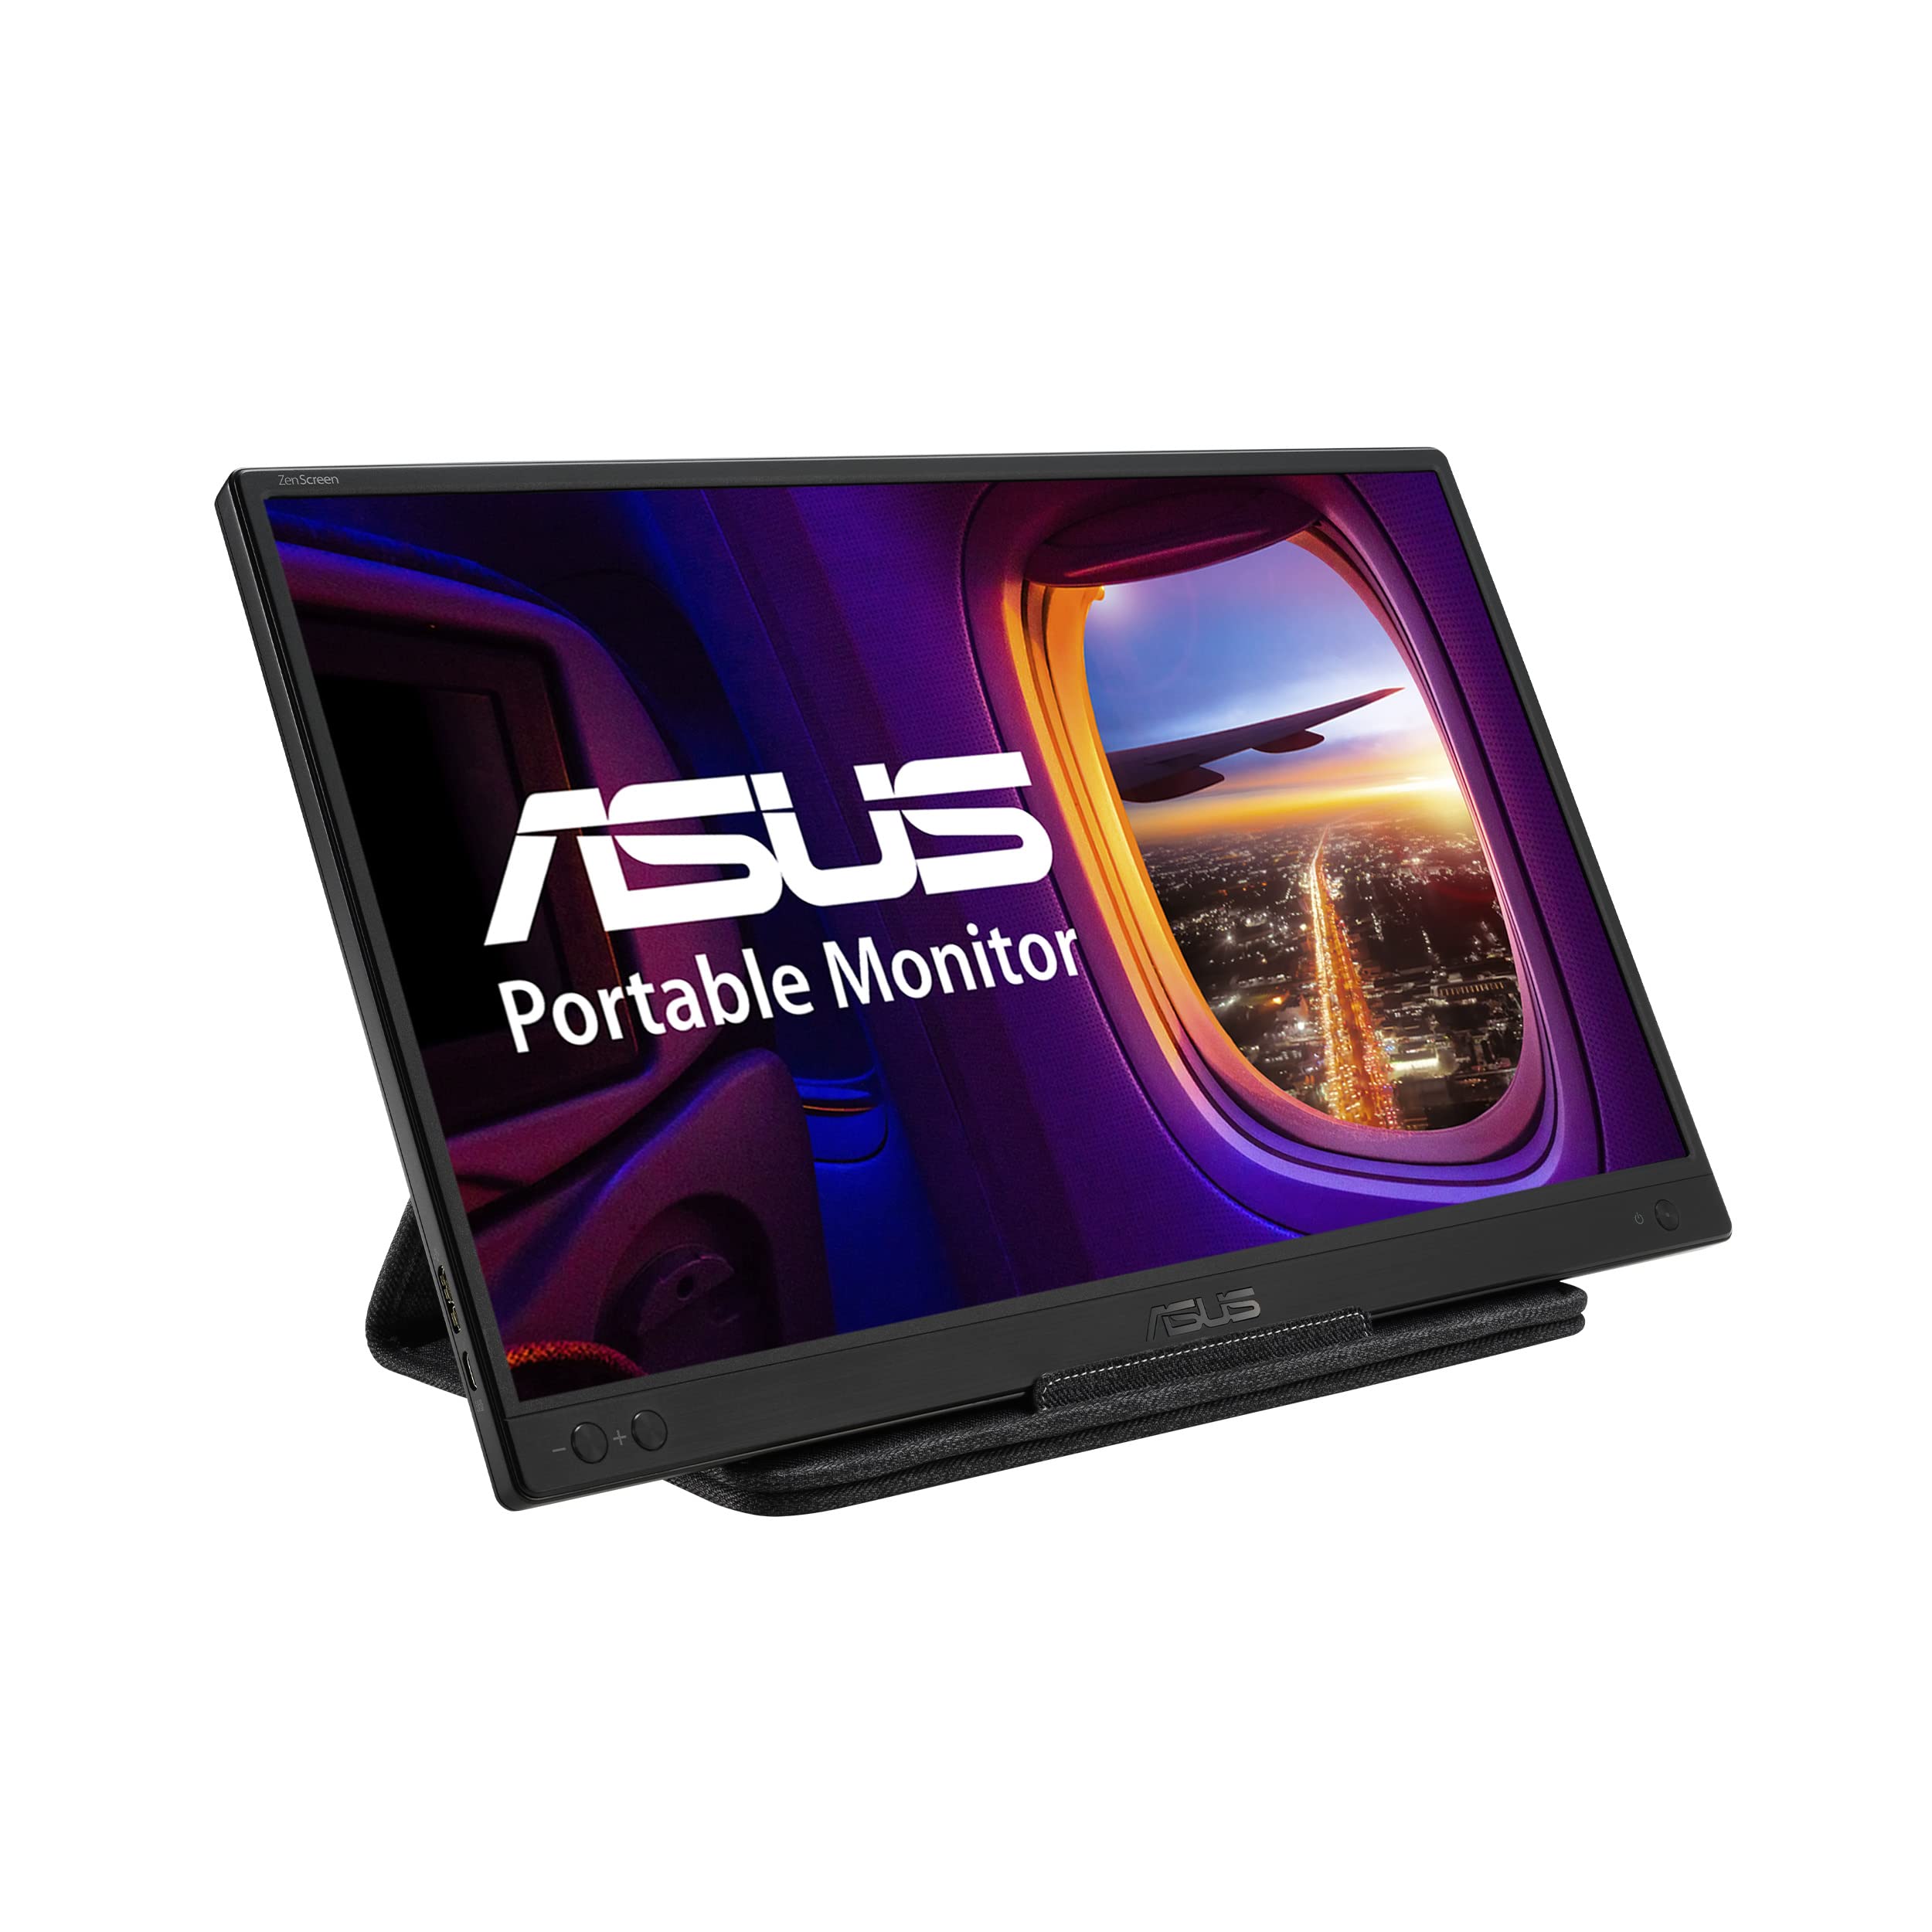 ASUS ZenScreen 15.6” 1080P Portable Monitor (MB166B)-Full HD,IPS, USB3.2, Anti-glare surface, USB-powered, Flicker Free, Blue Light Filter, Tripod Mountable, Protective Sleeve